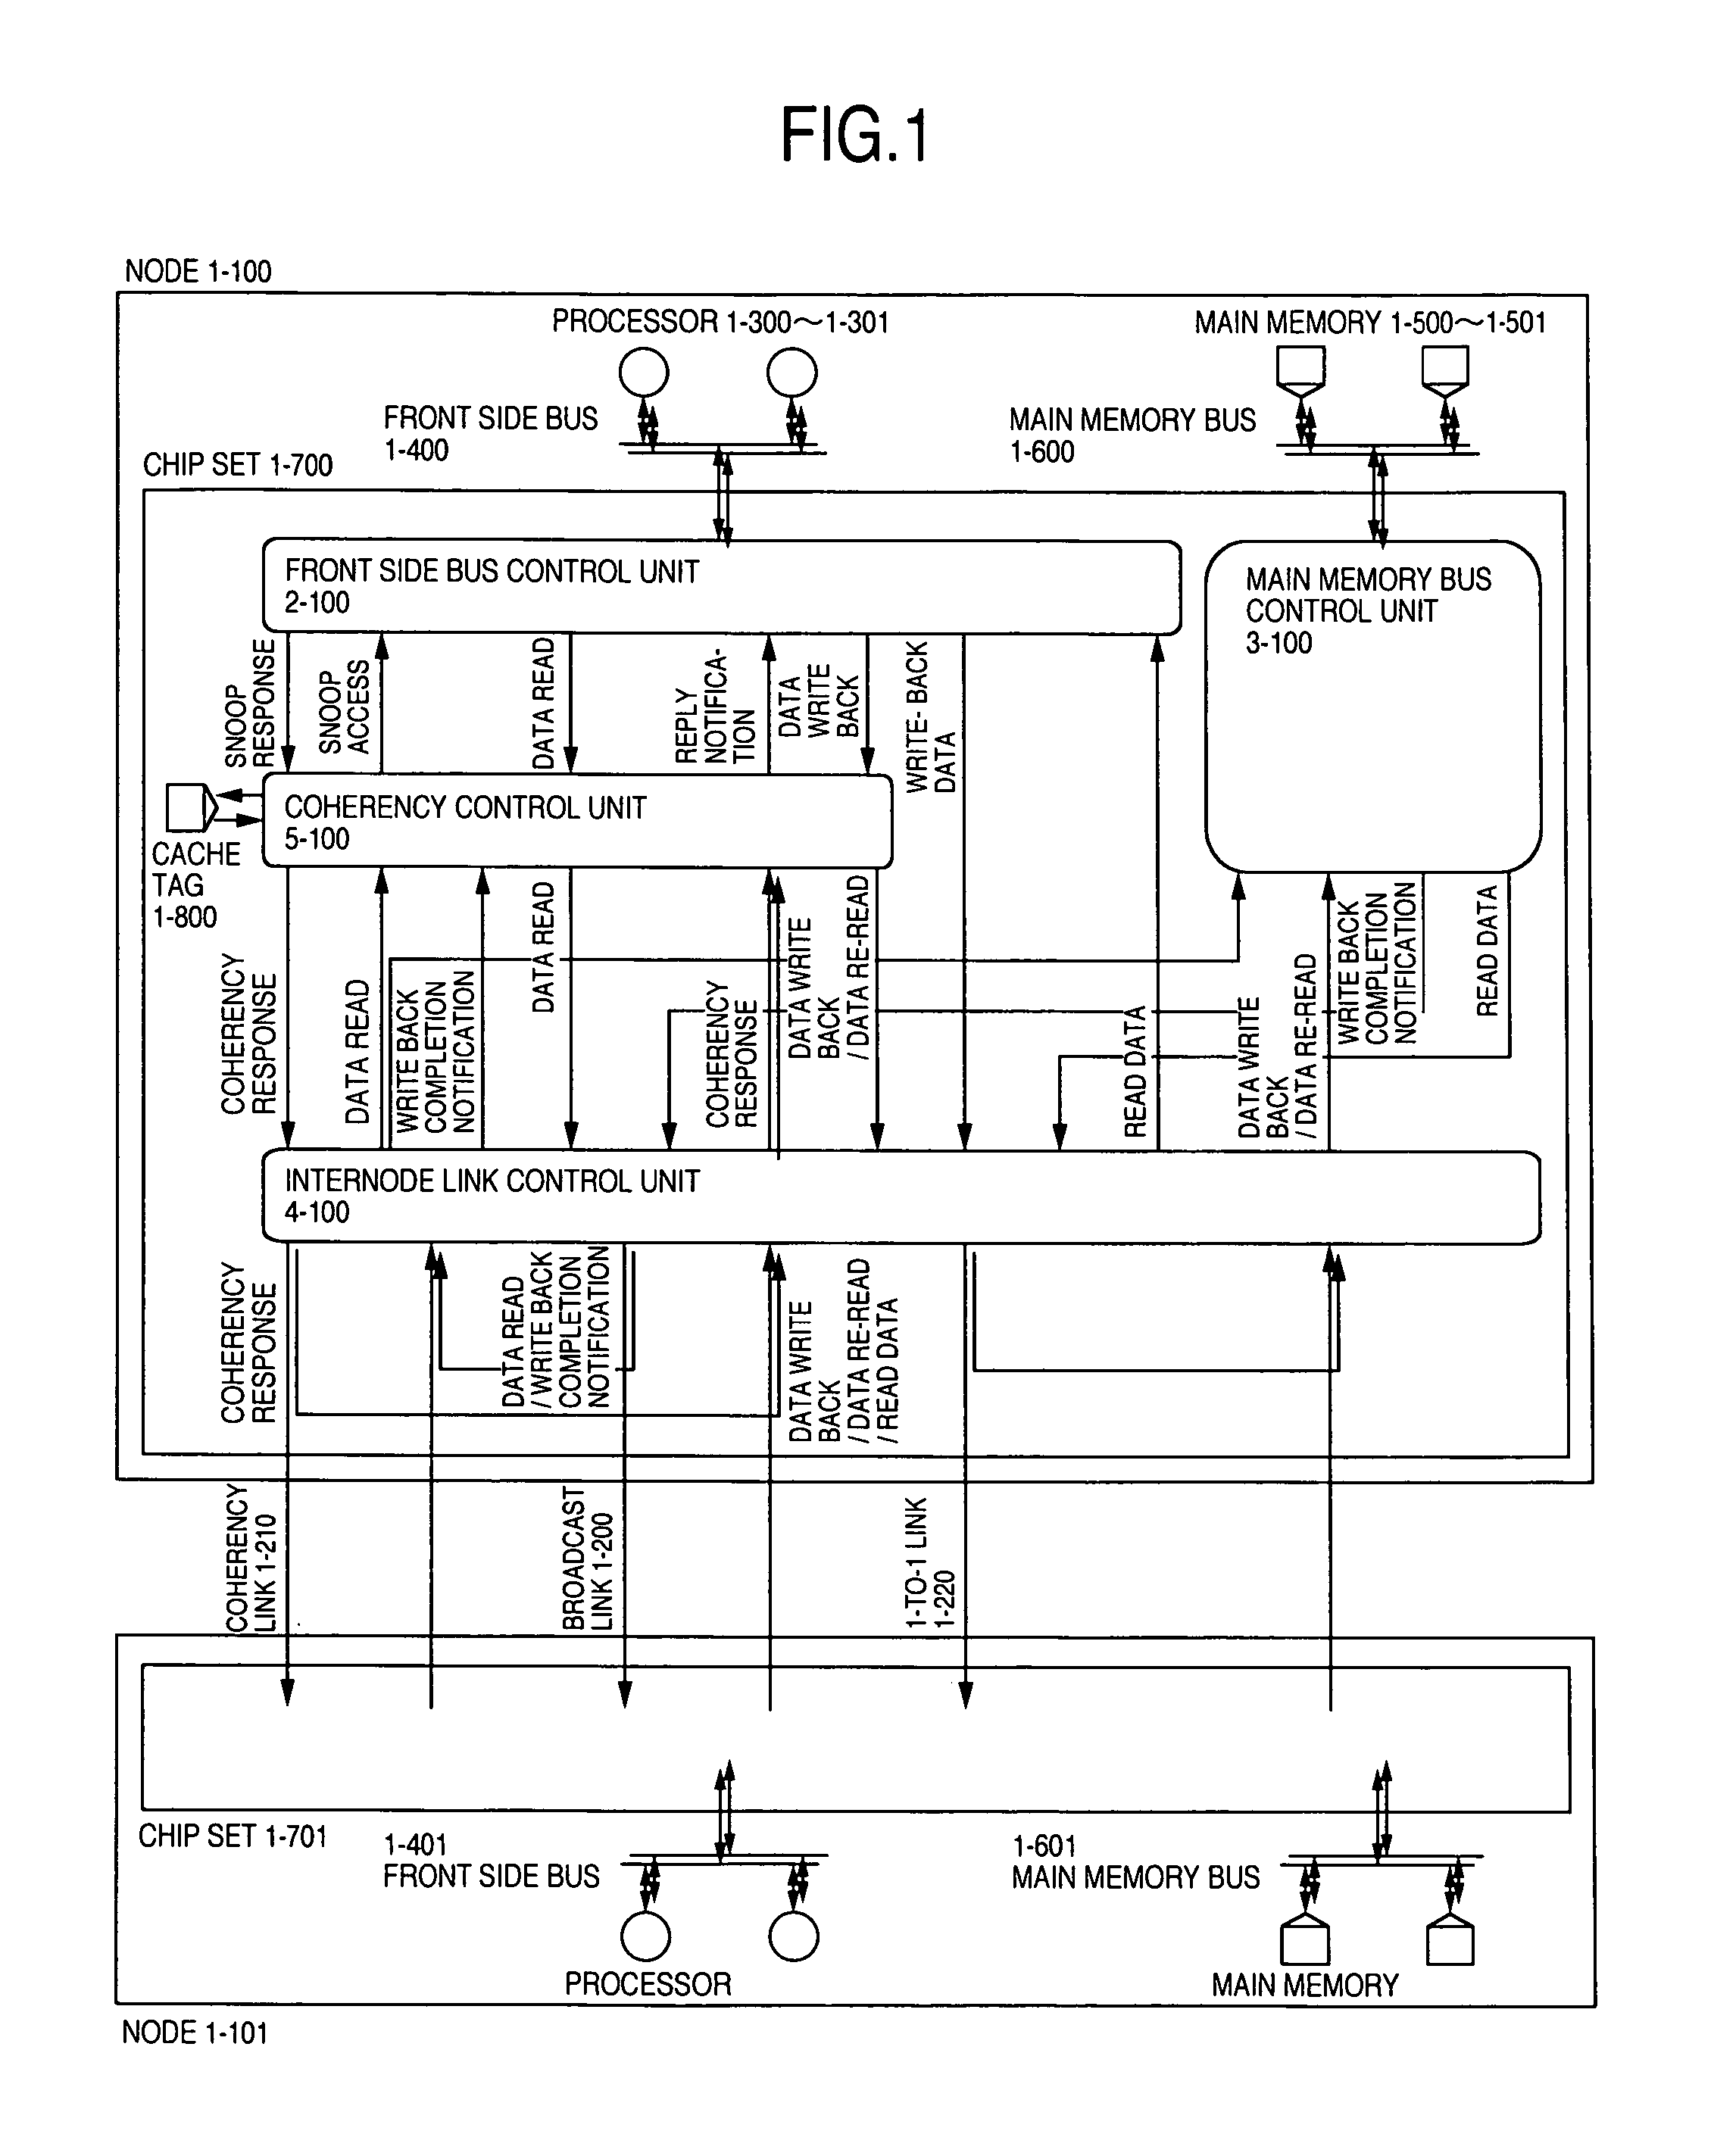 Shared memory multiprocessor system